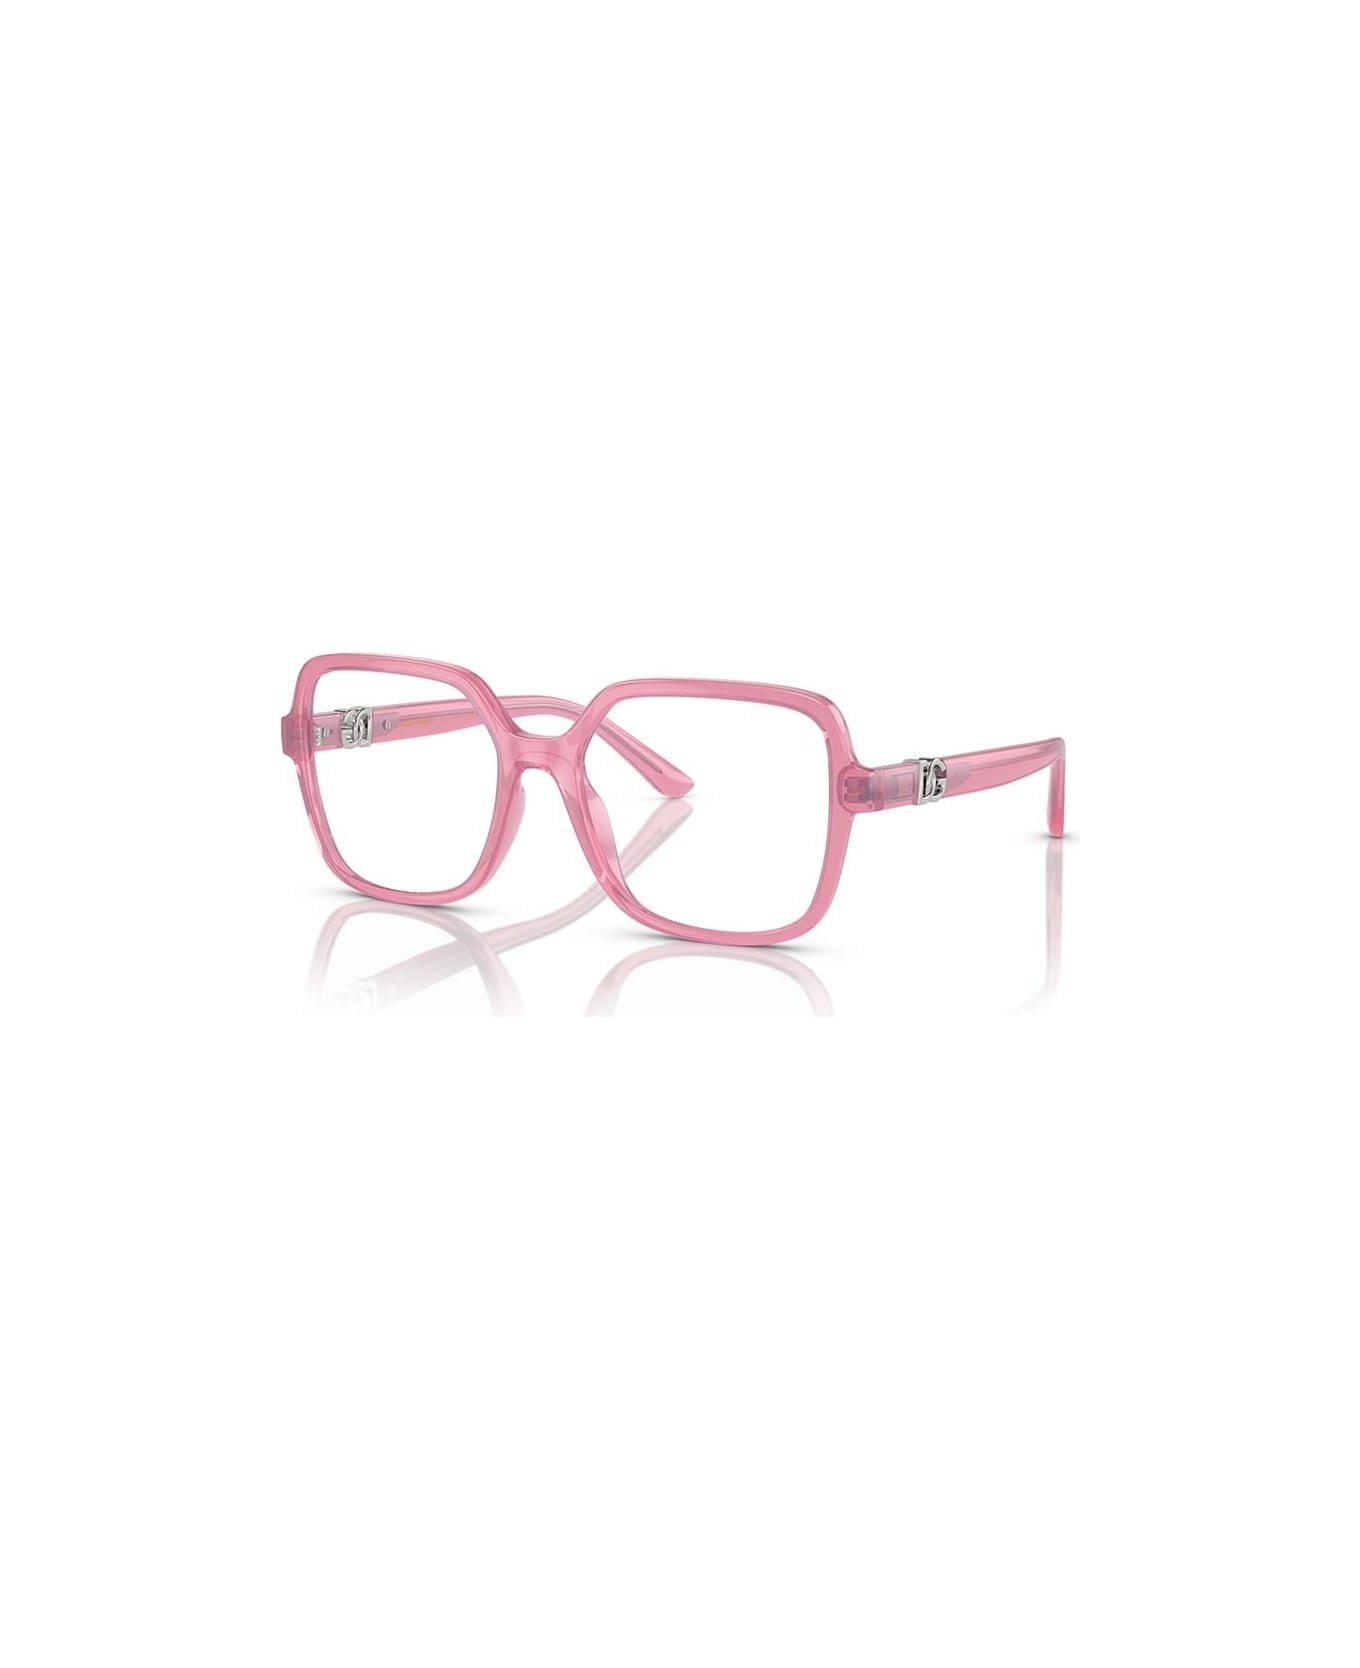 Dolce & Gabbana MEN ACCESSORIES BELTS Eyewear Glasses - Rosa